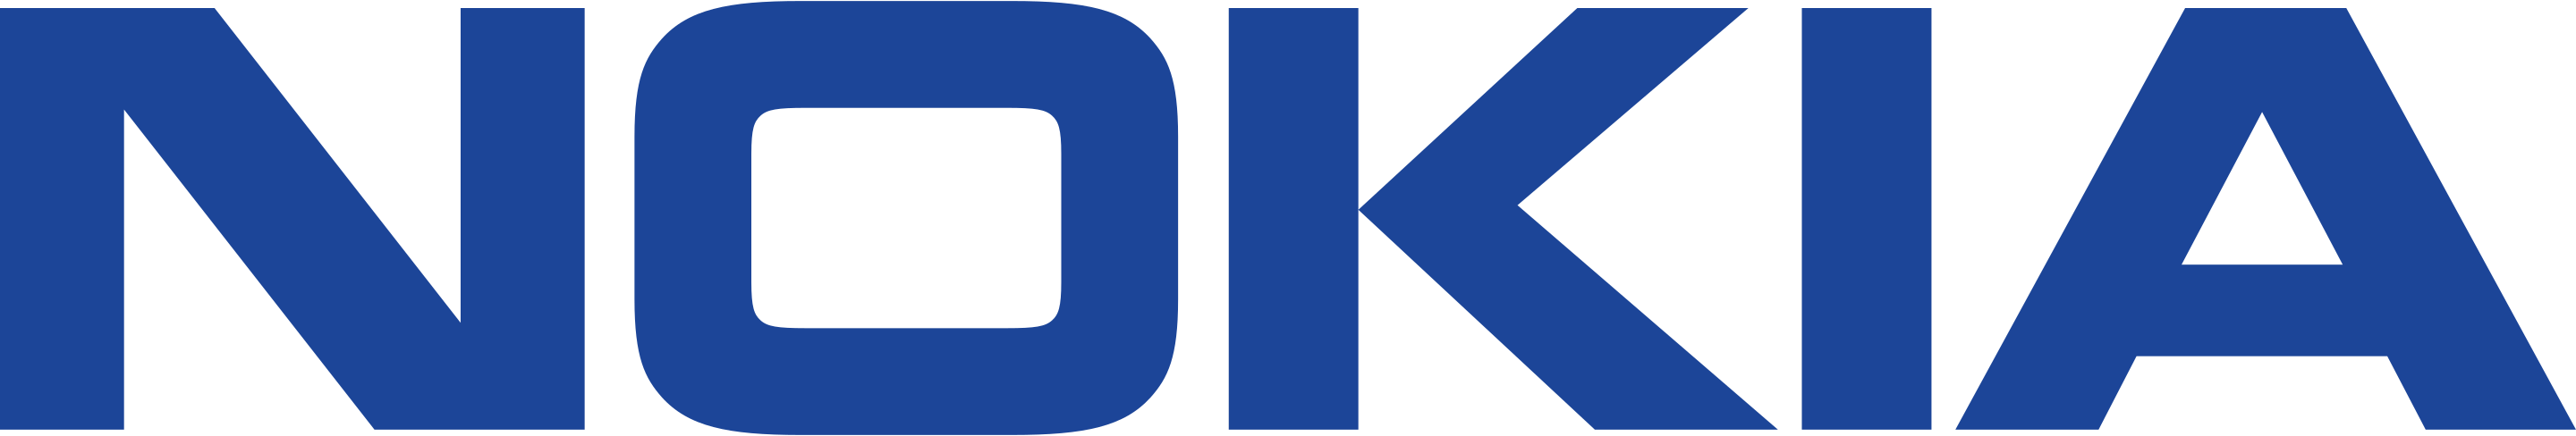 The logo of the Finnish telecommunications company, Nokia Corporation.